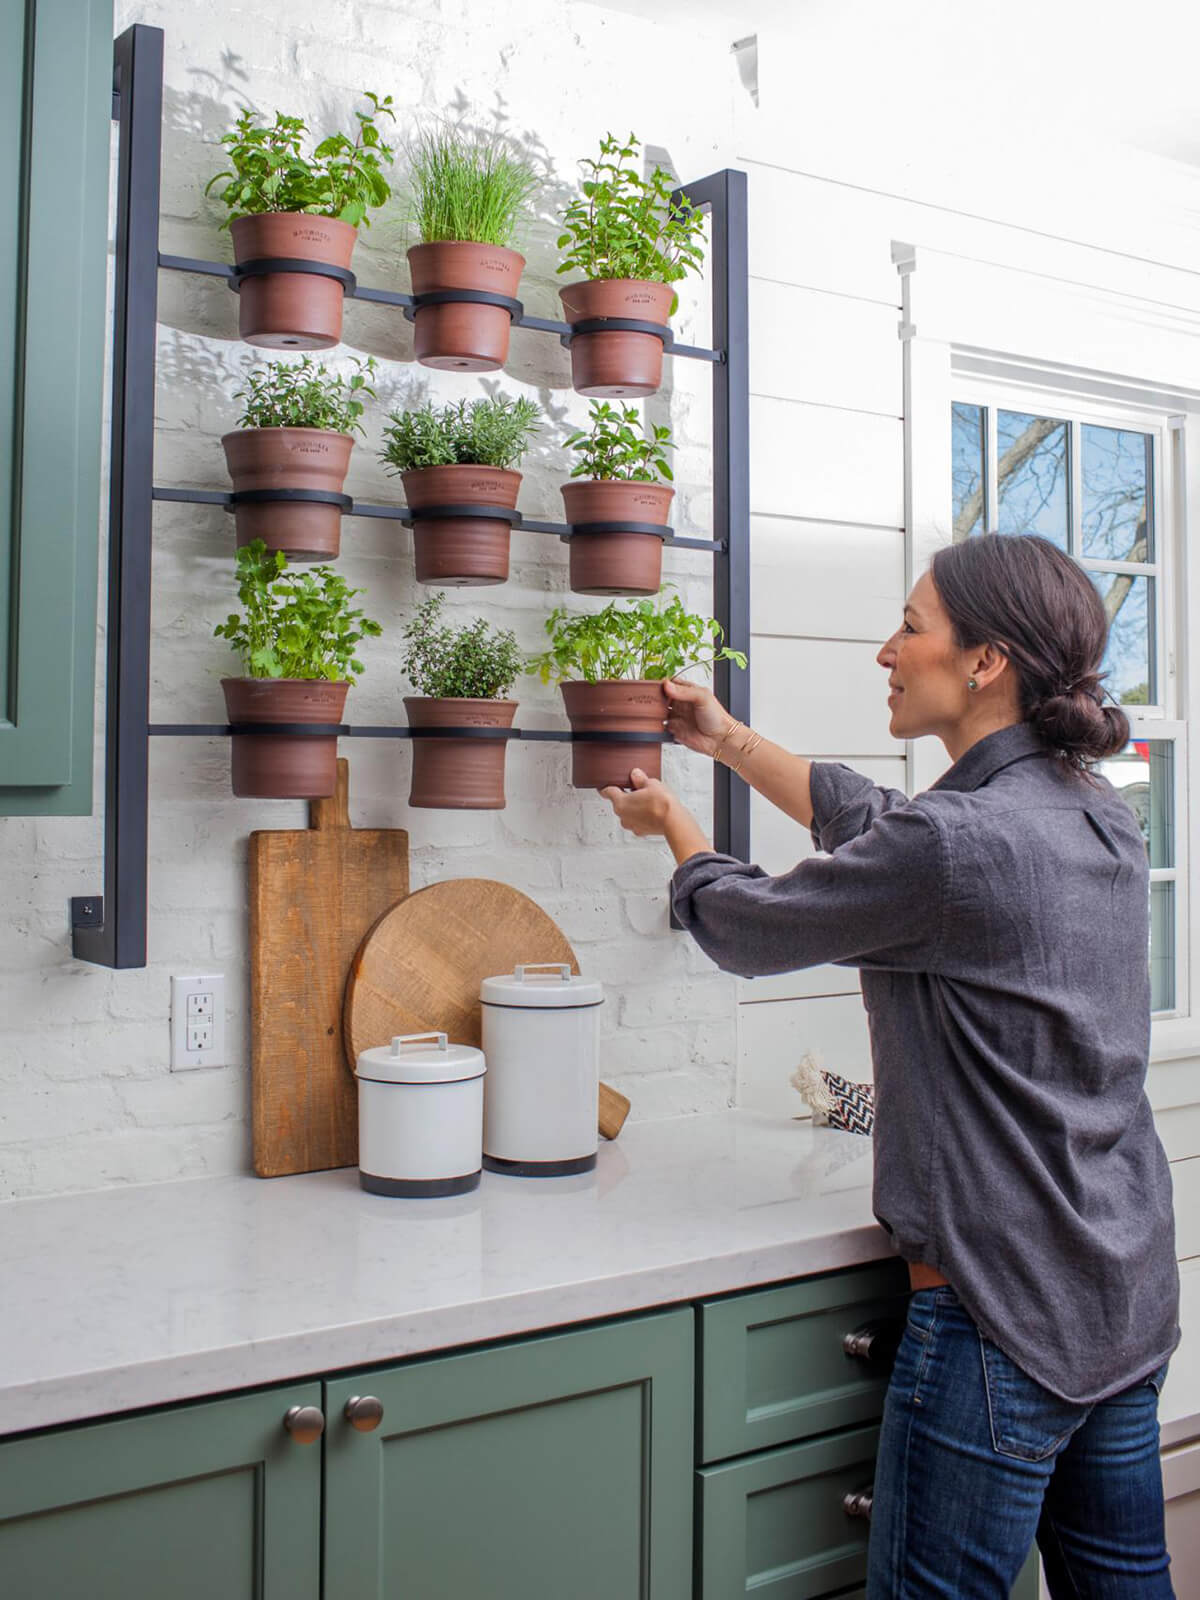 25 Best Herb Garden Ideas and Designs for 2020